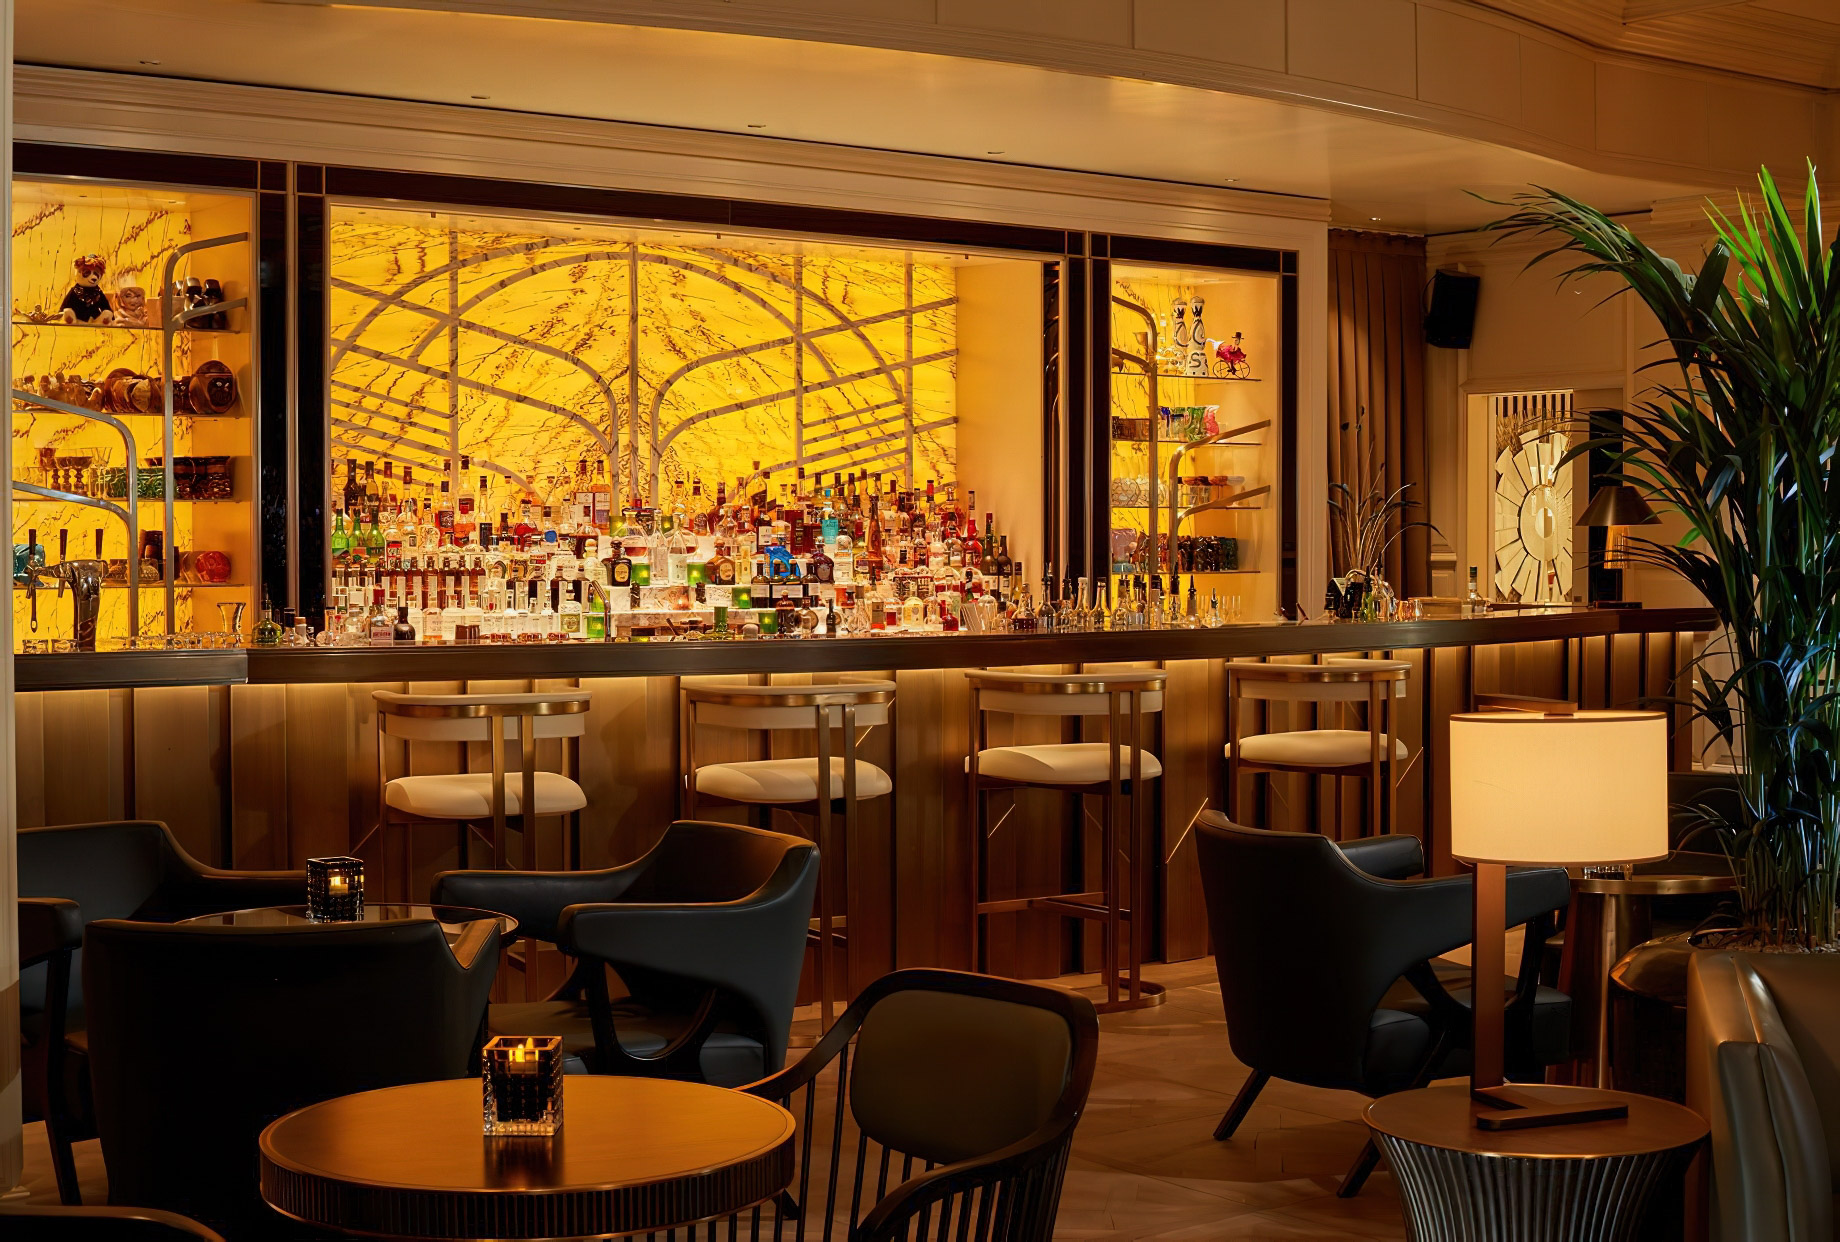 The Ritz-Carlton, Berlin Hotel - Berlin, Germany - The Curtain Club Bar